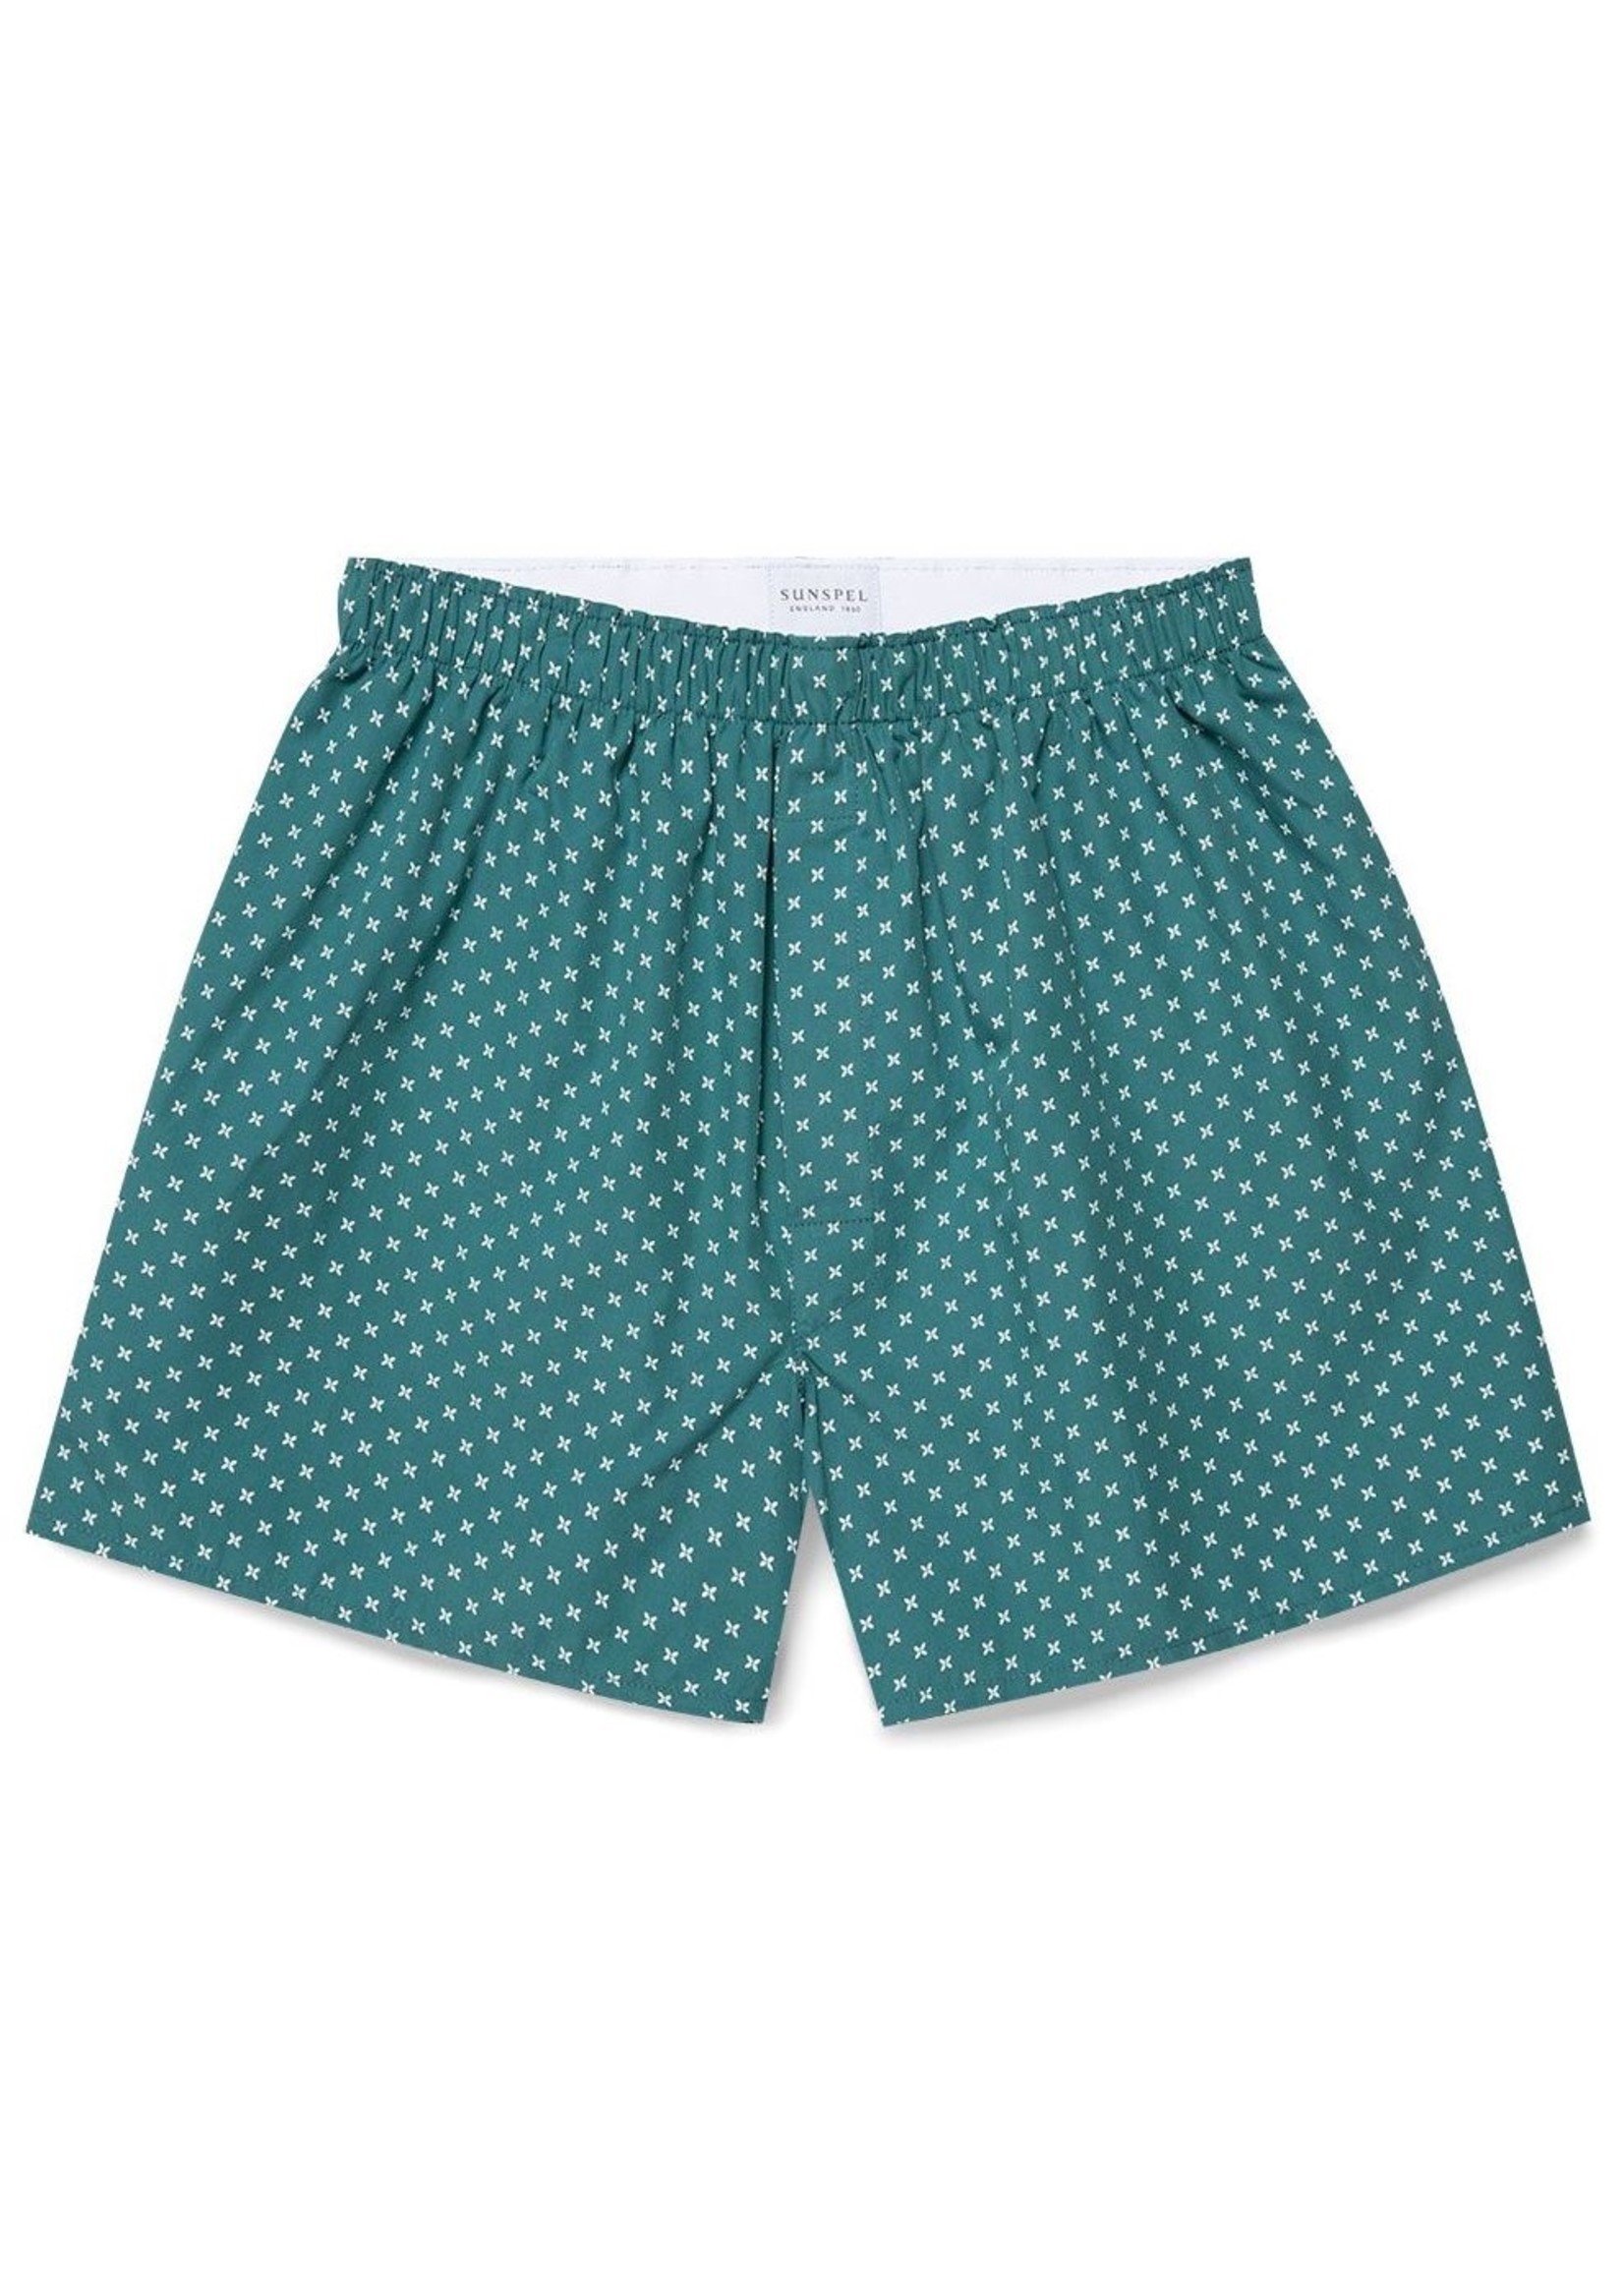 SUNSPEL Cotton Boxer Shorts for Men